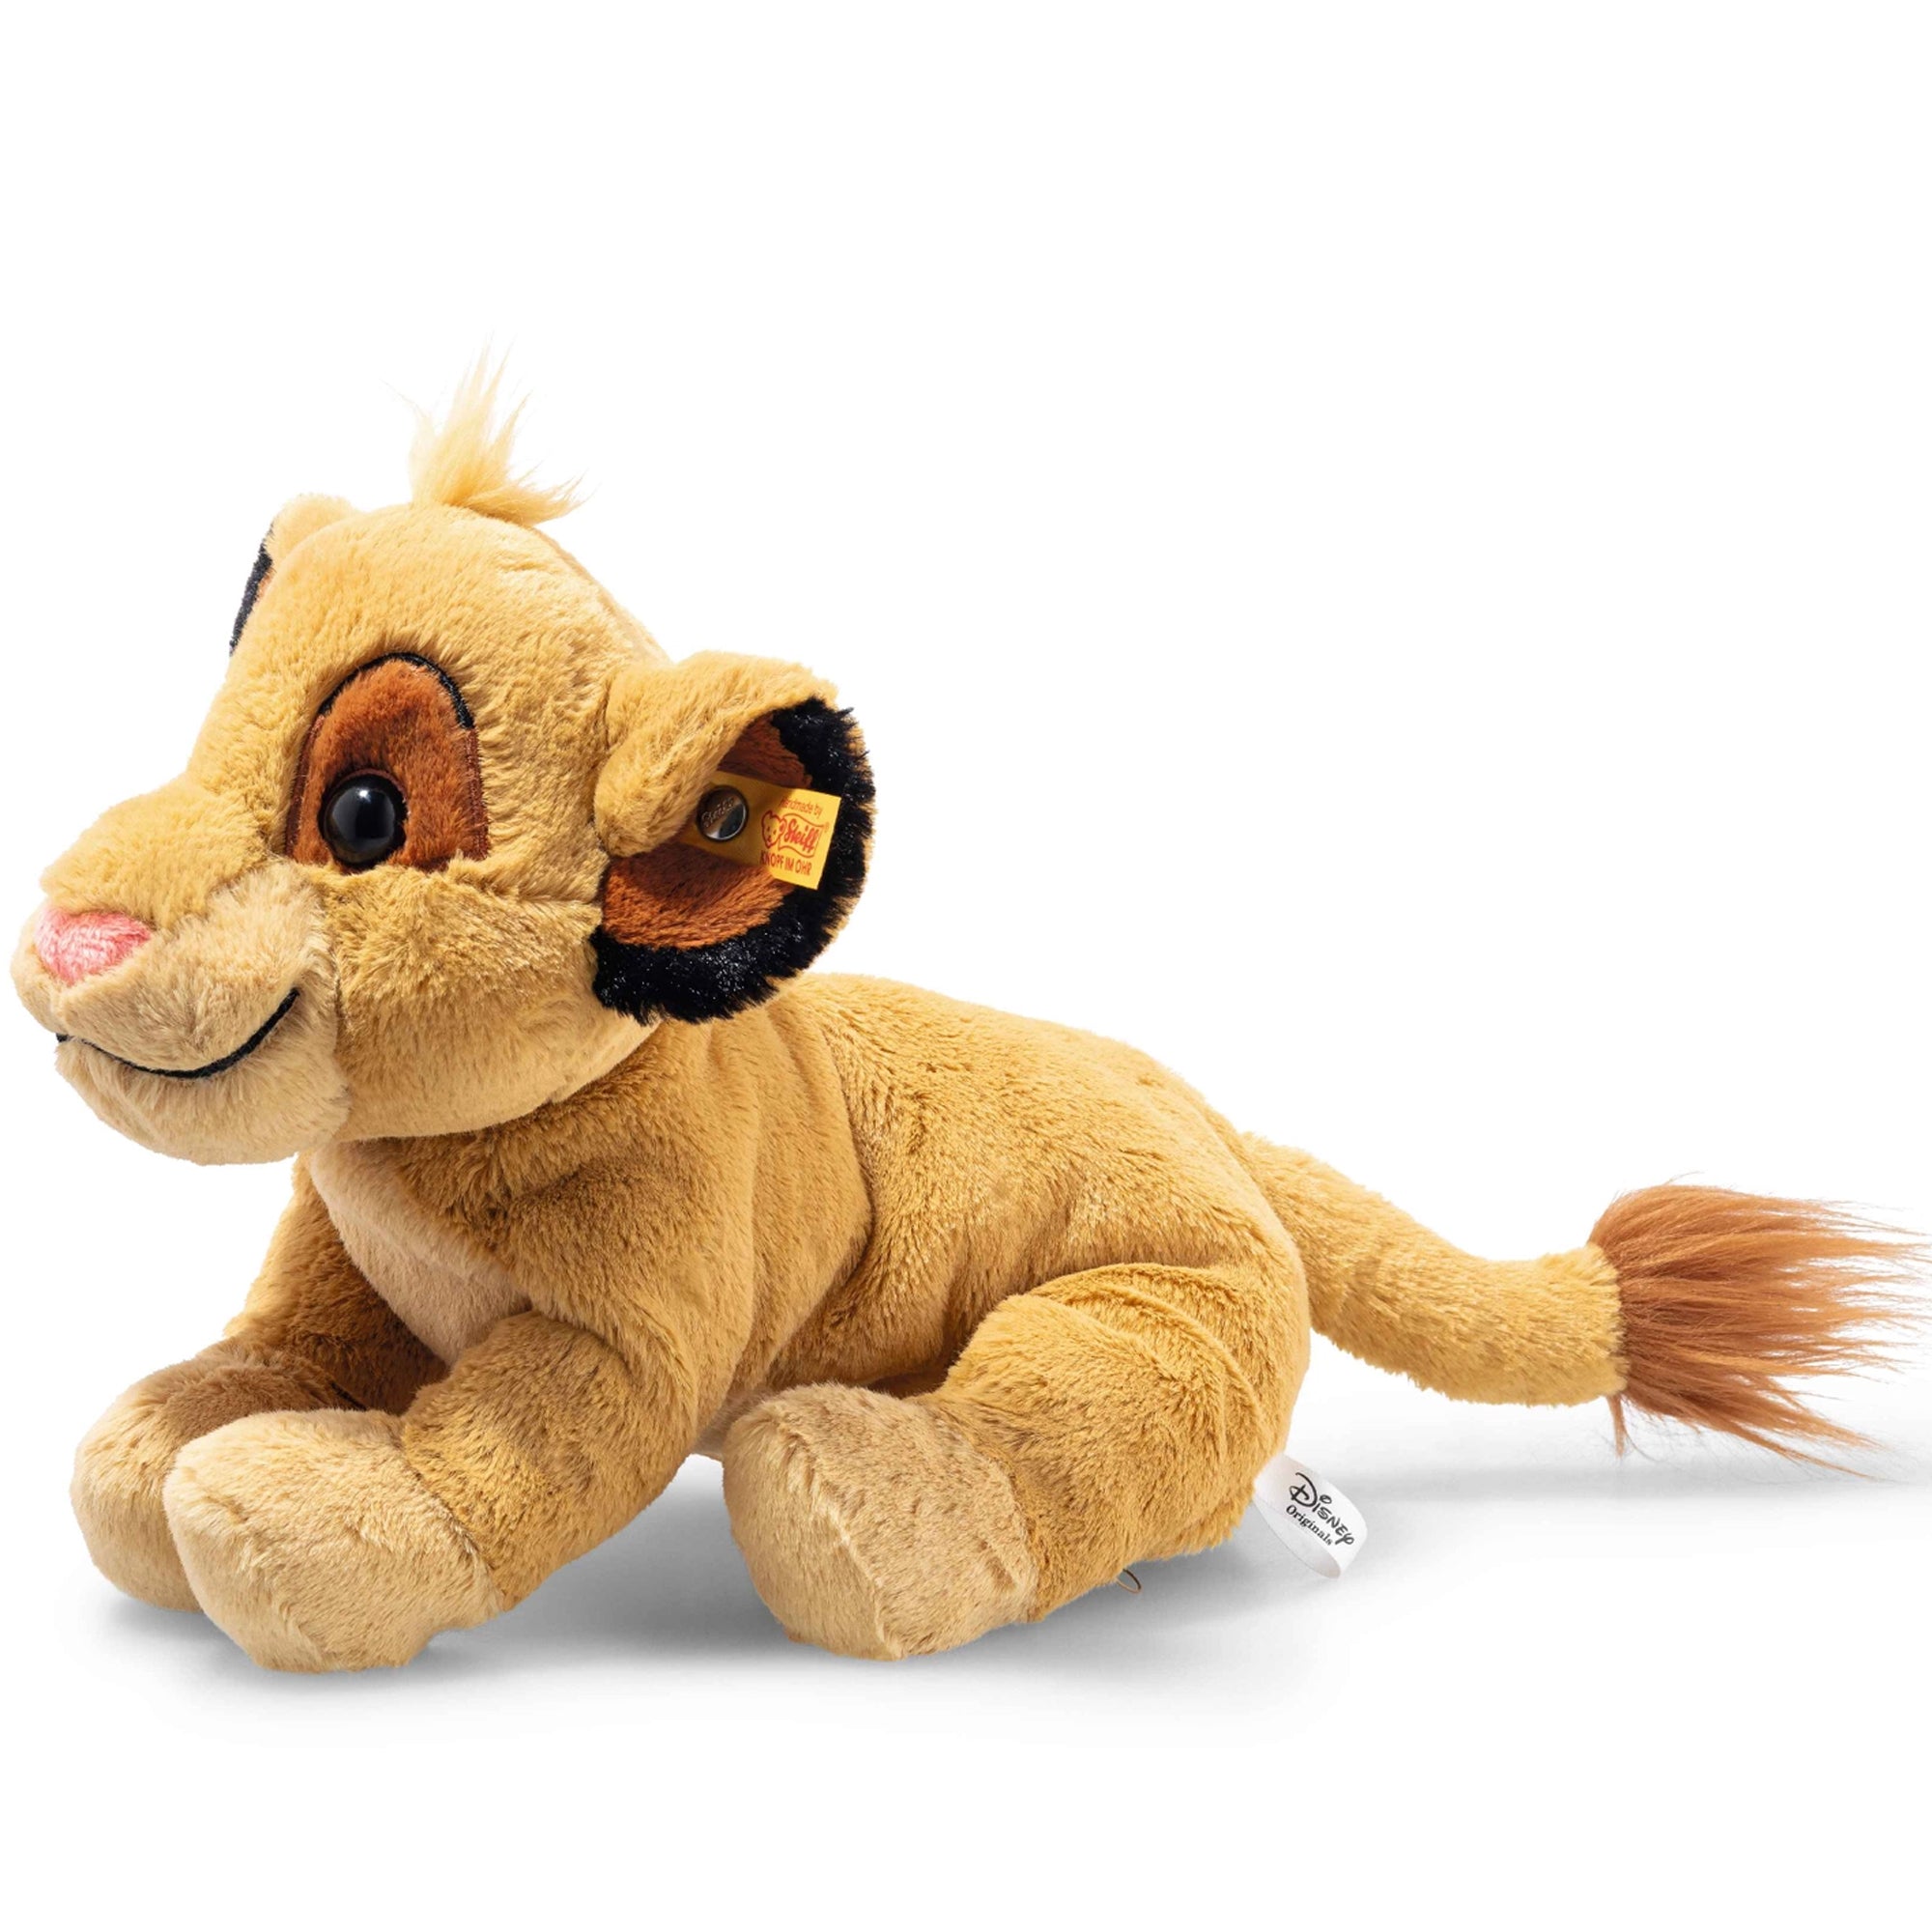 Disney's "the Lion King" Simba Stuffed Plush Toy 10"